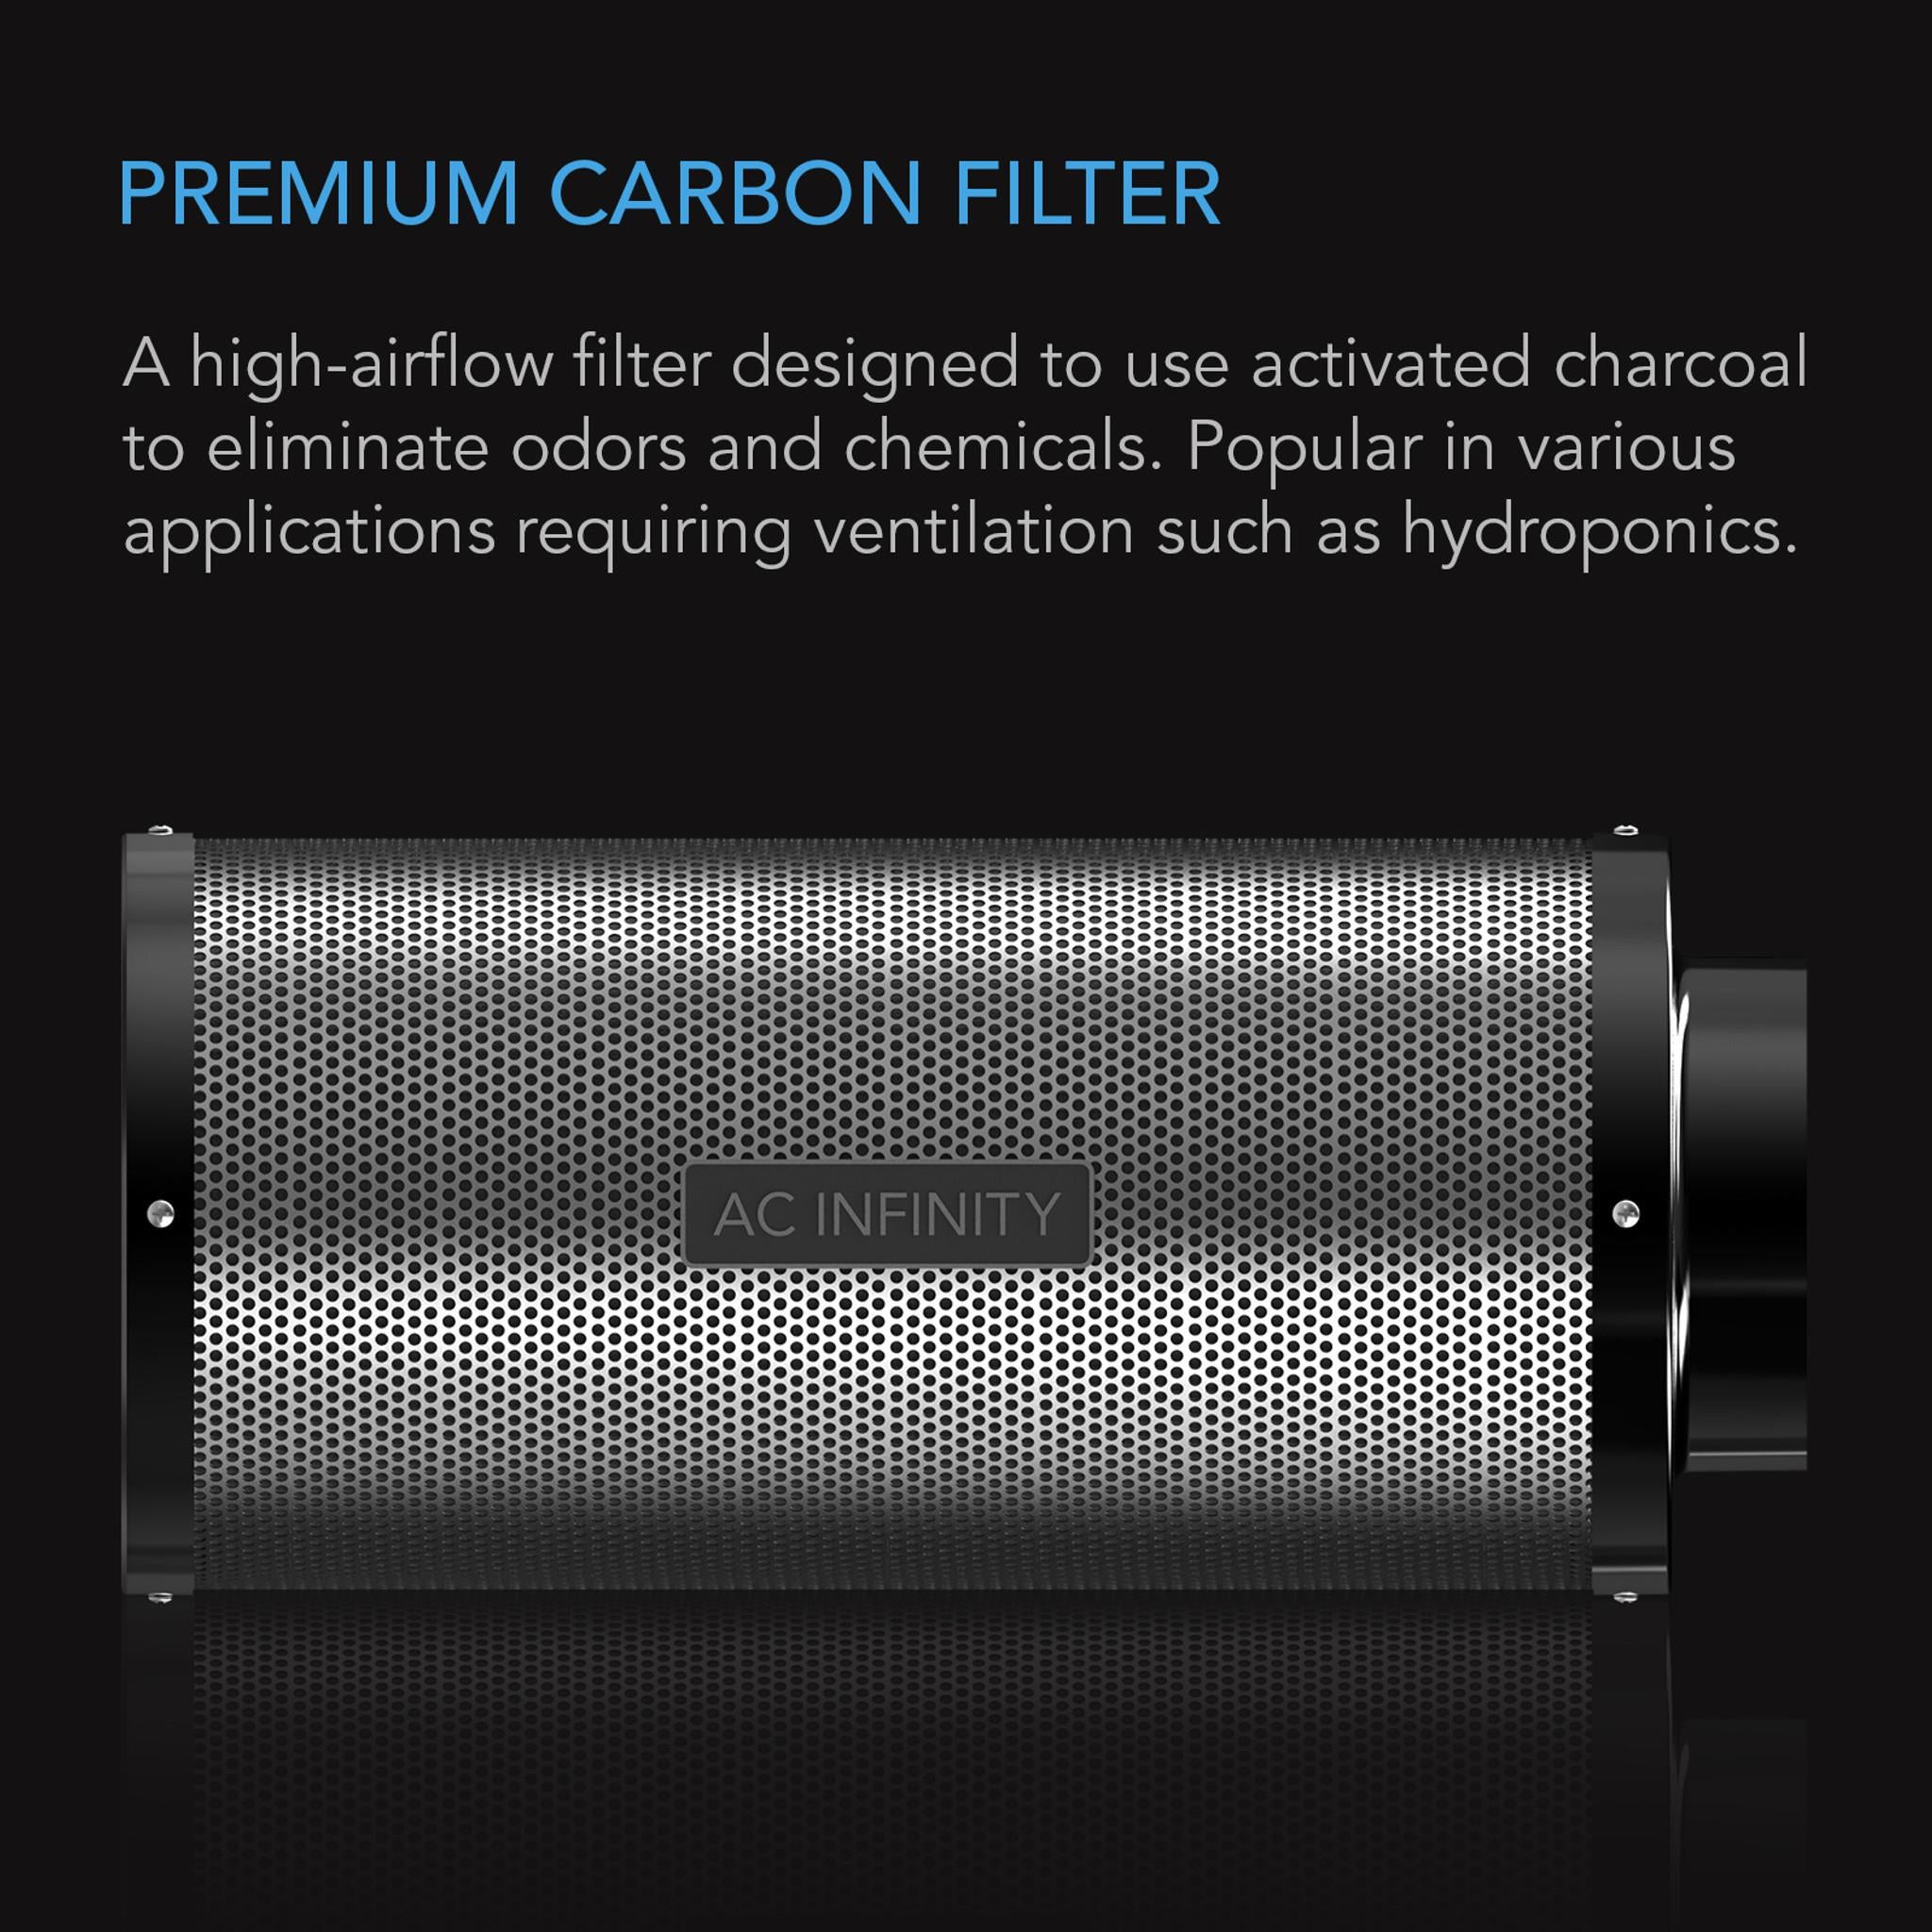 300mm AC Infinity Carbon Filter premium